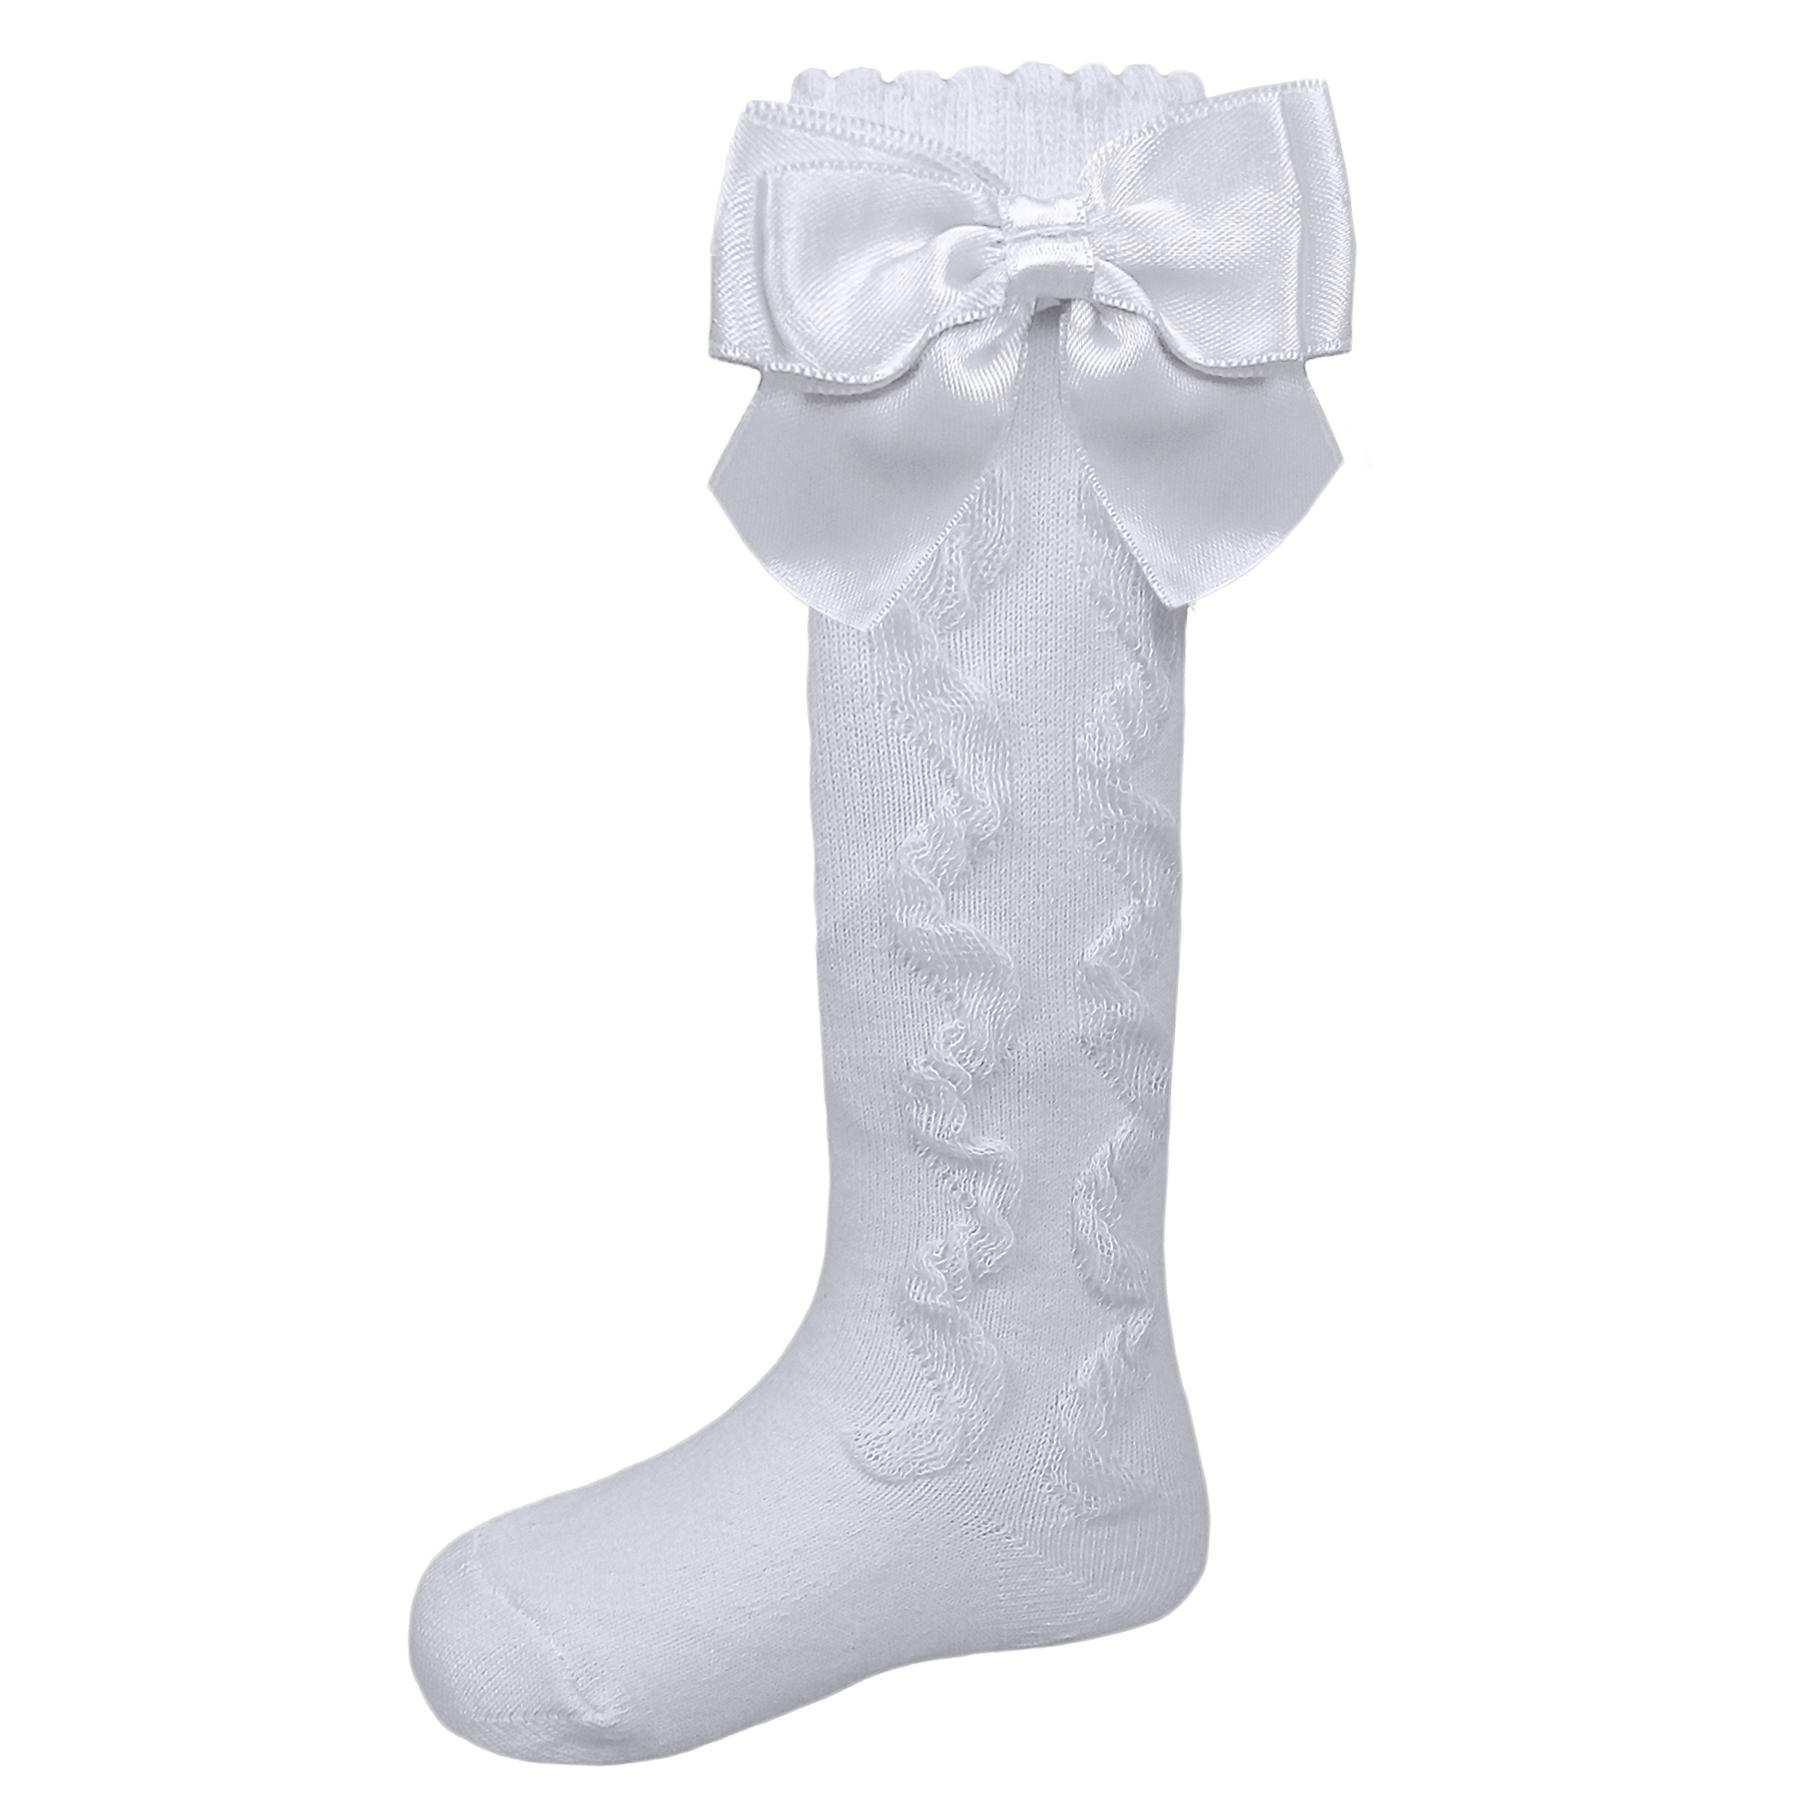 Pex Kids Grazia Knee High Side Bow Ruffle Socks in White